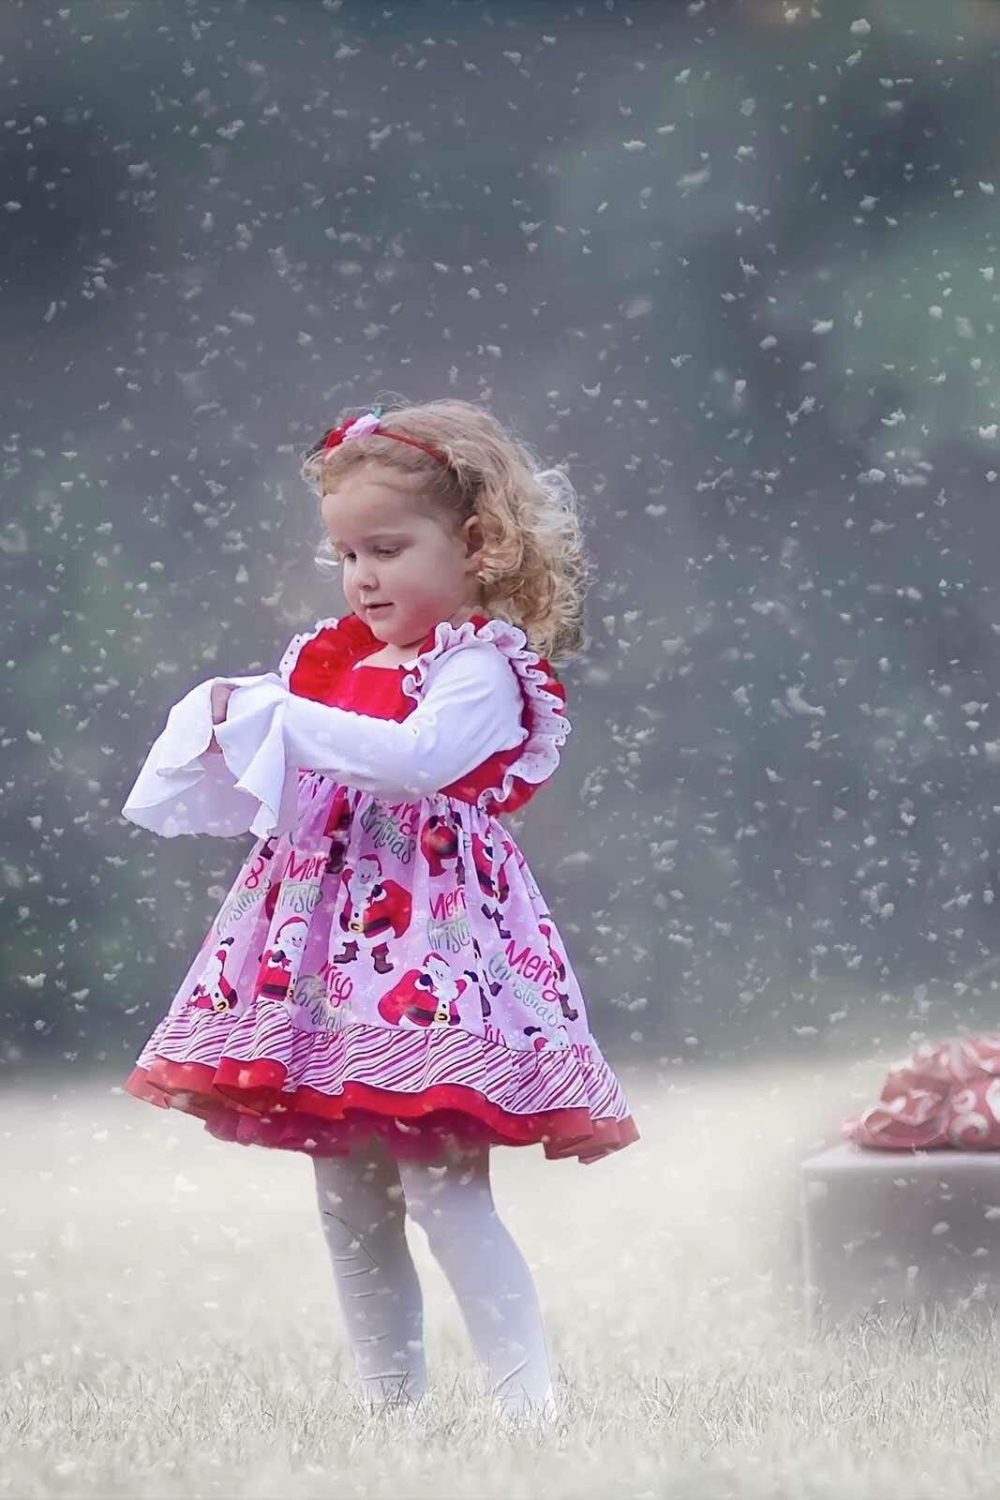 Kinder Kouture Ready-To-Ship 2T RTS Sugarplum Santa Dress